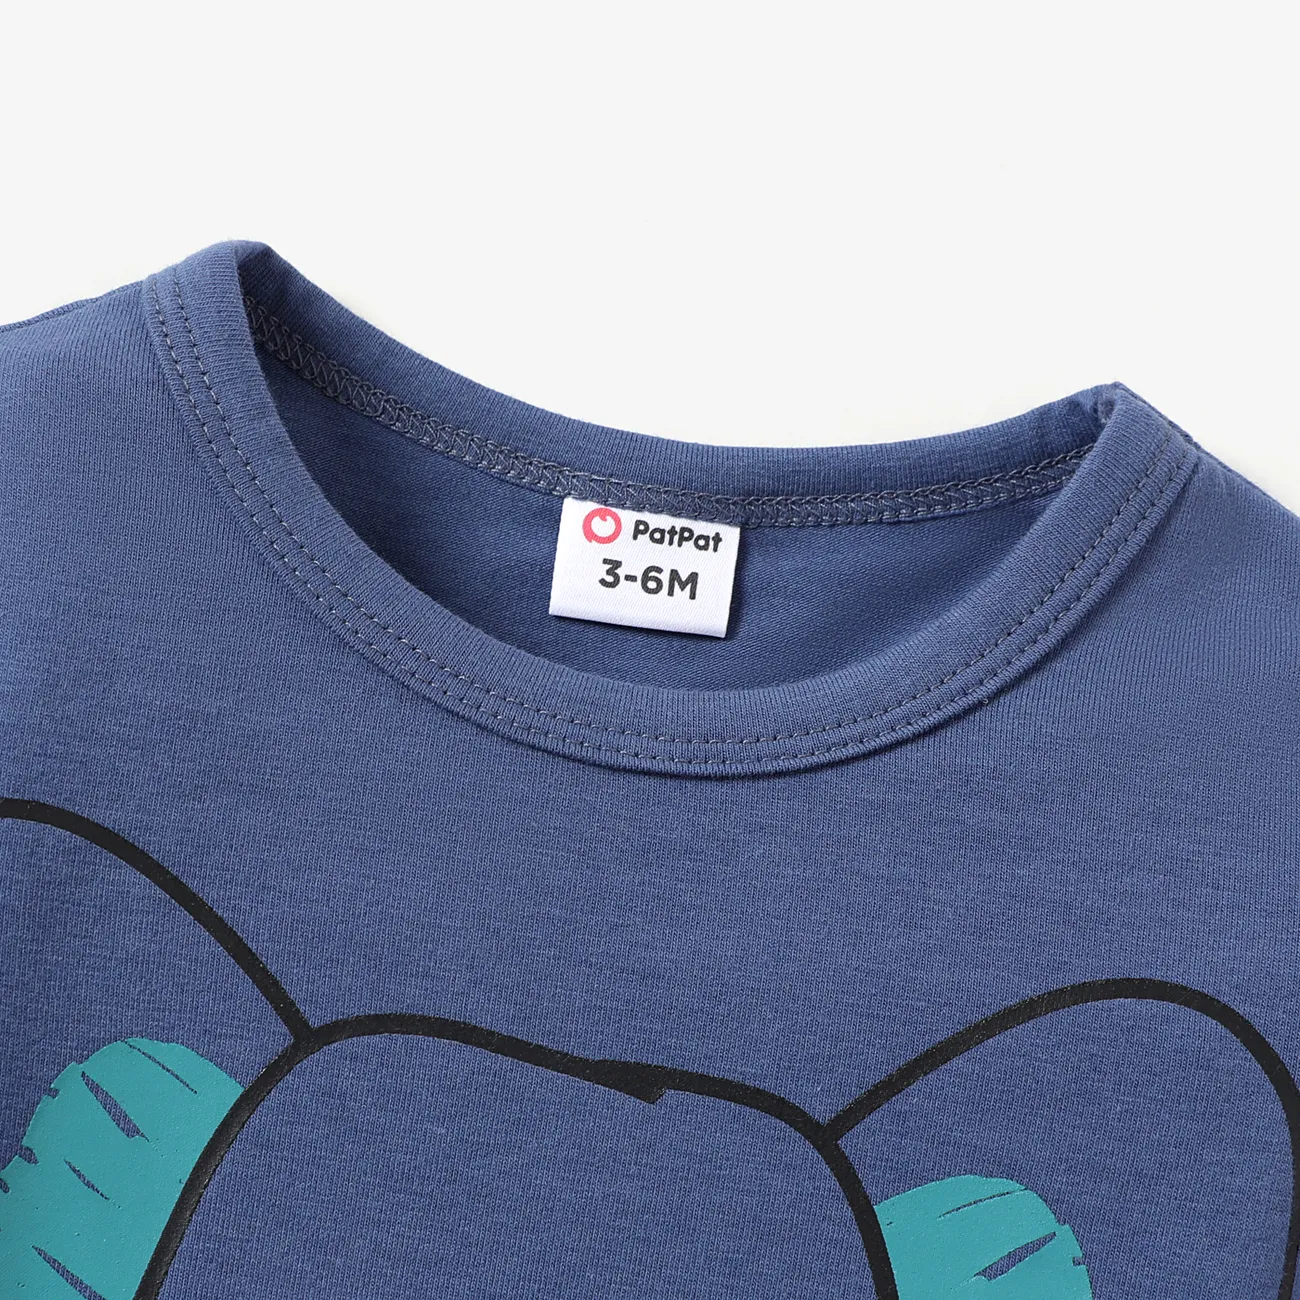 Baby Boy Elephant or Lion Pattern T-shirt Blue big image 1